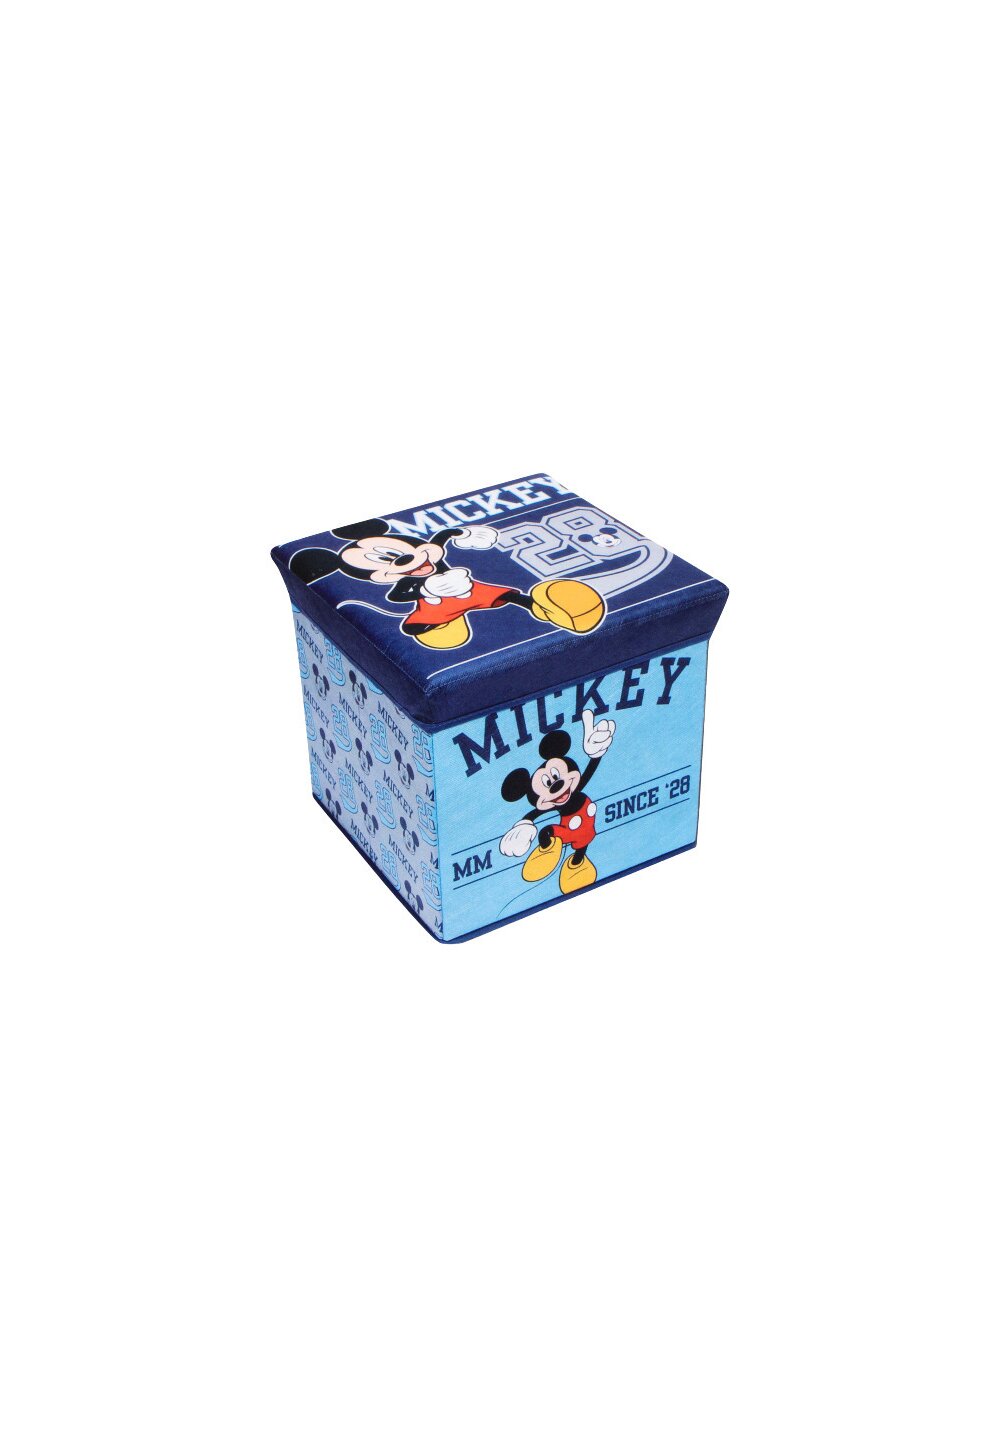 Cutie depozitare, Mickey Mouse, Since 28, bluemarin DISNEY